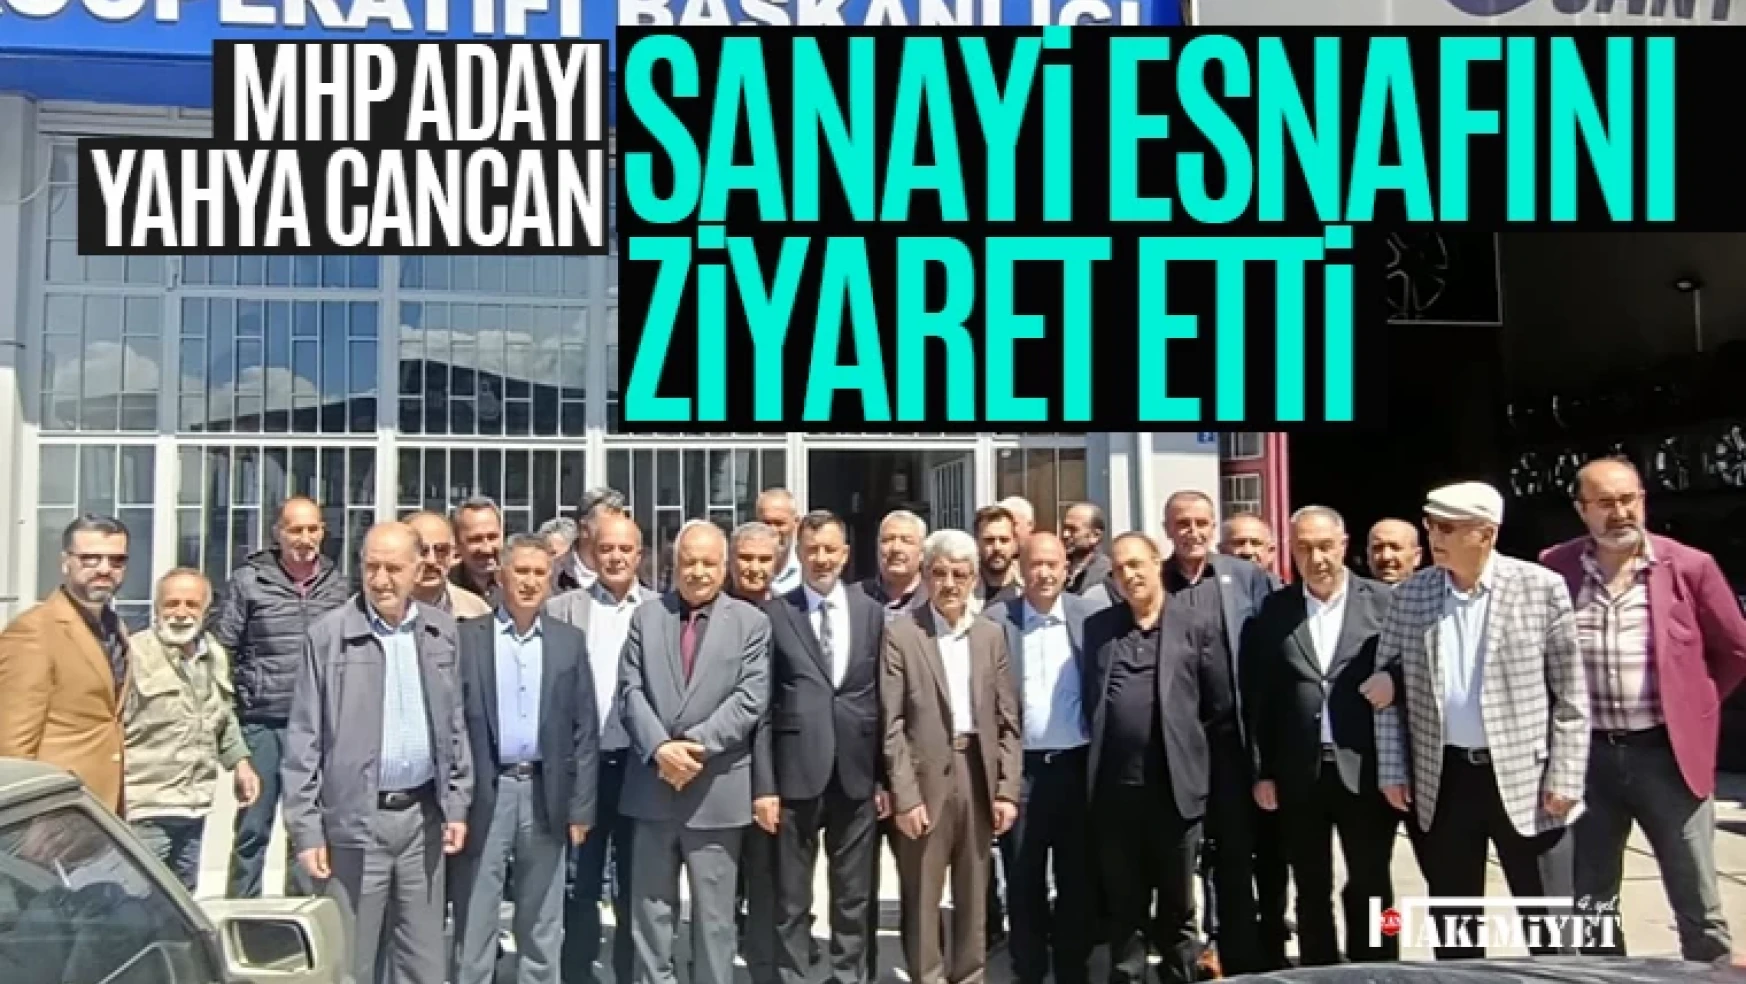 MHP Adayı Yahya Cancan, sanayi esnafını ziyaret etti